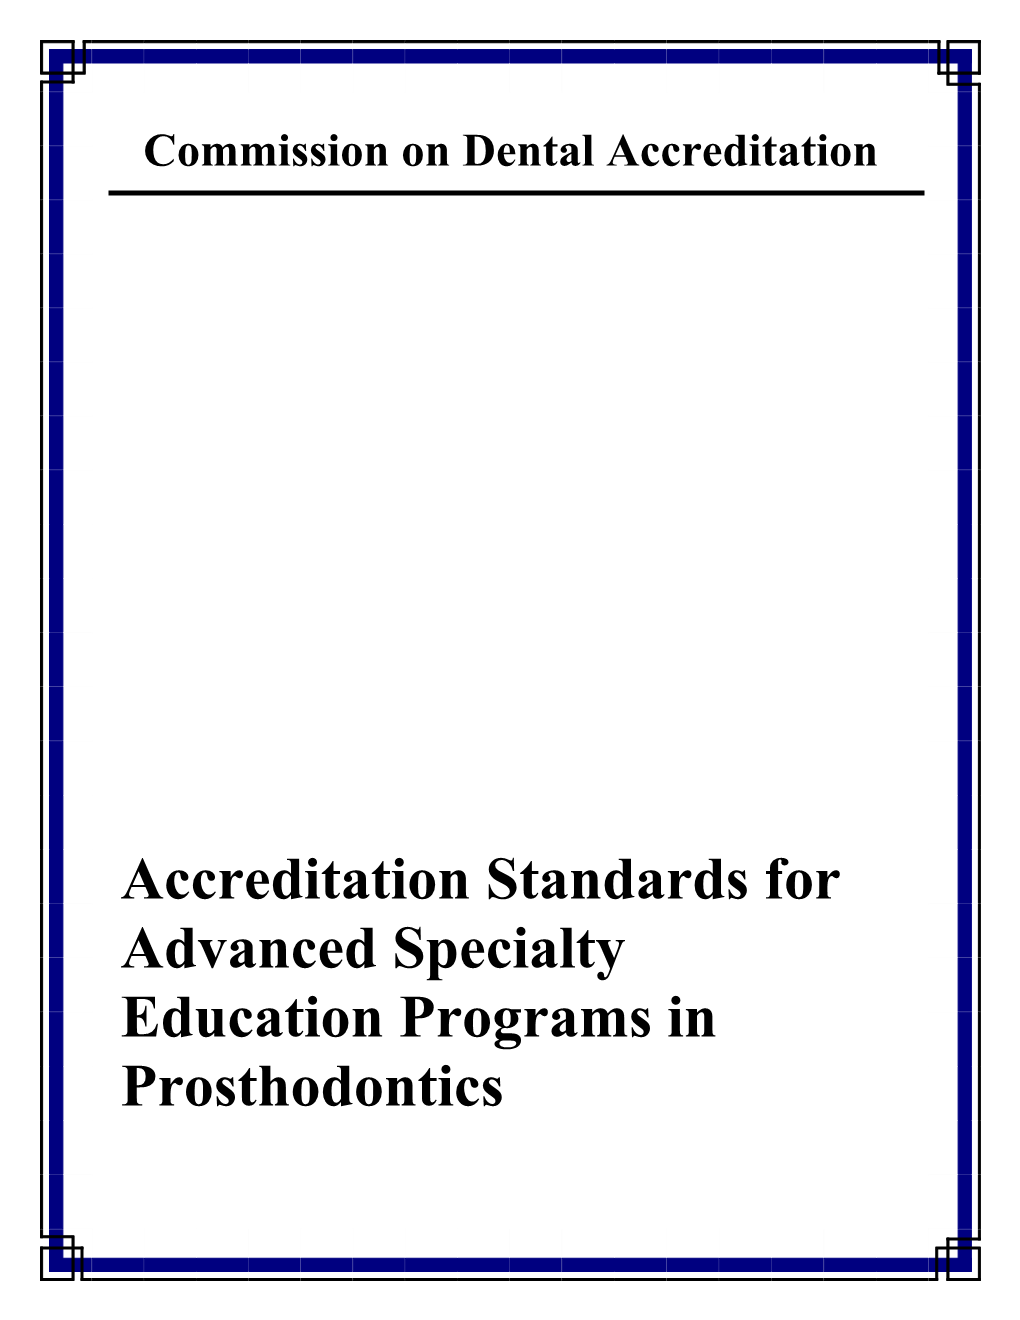 CODA.Org: 2018 Accreditation Standards for Prosthodontics